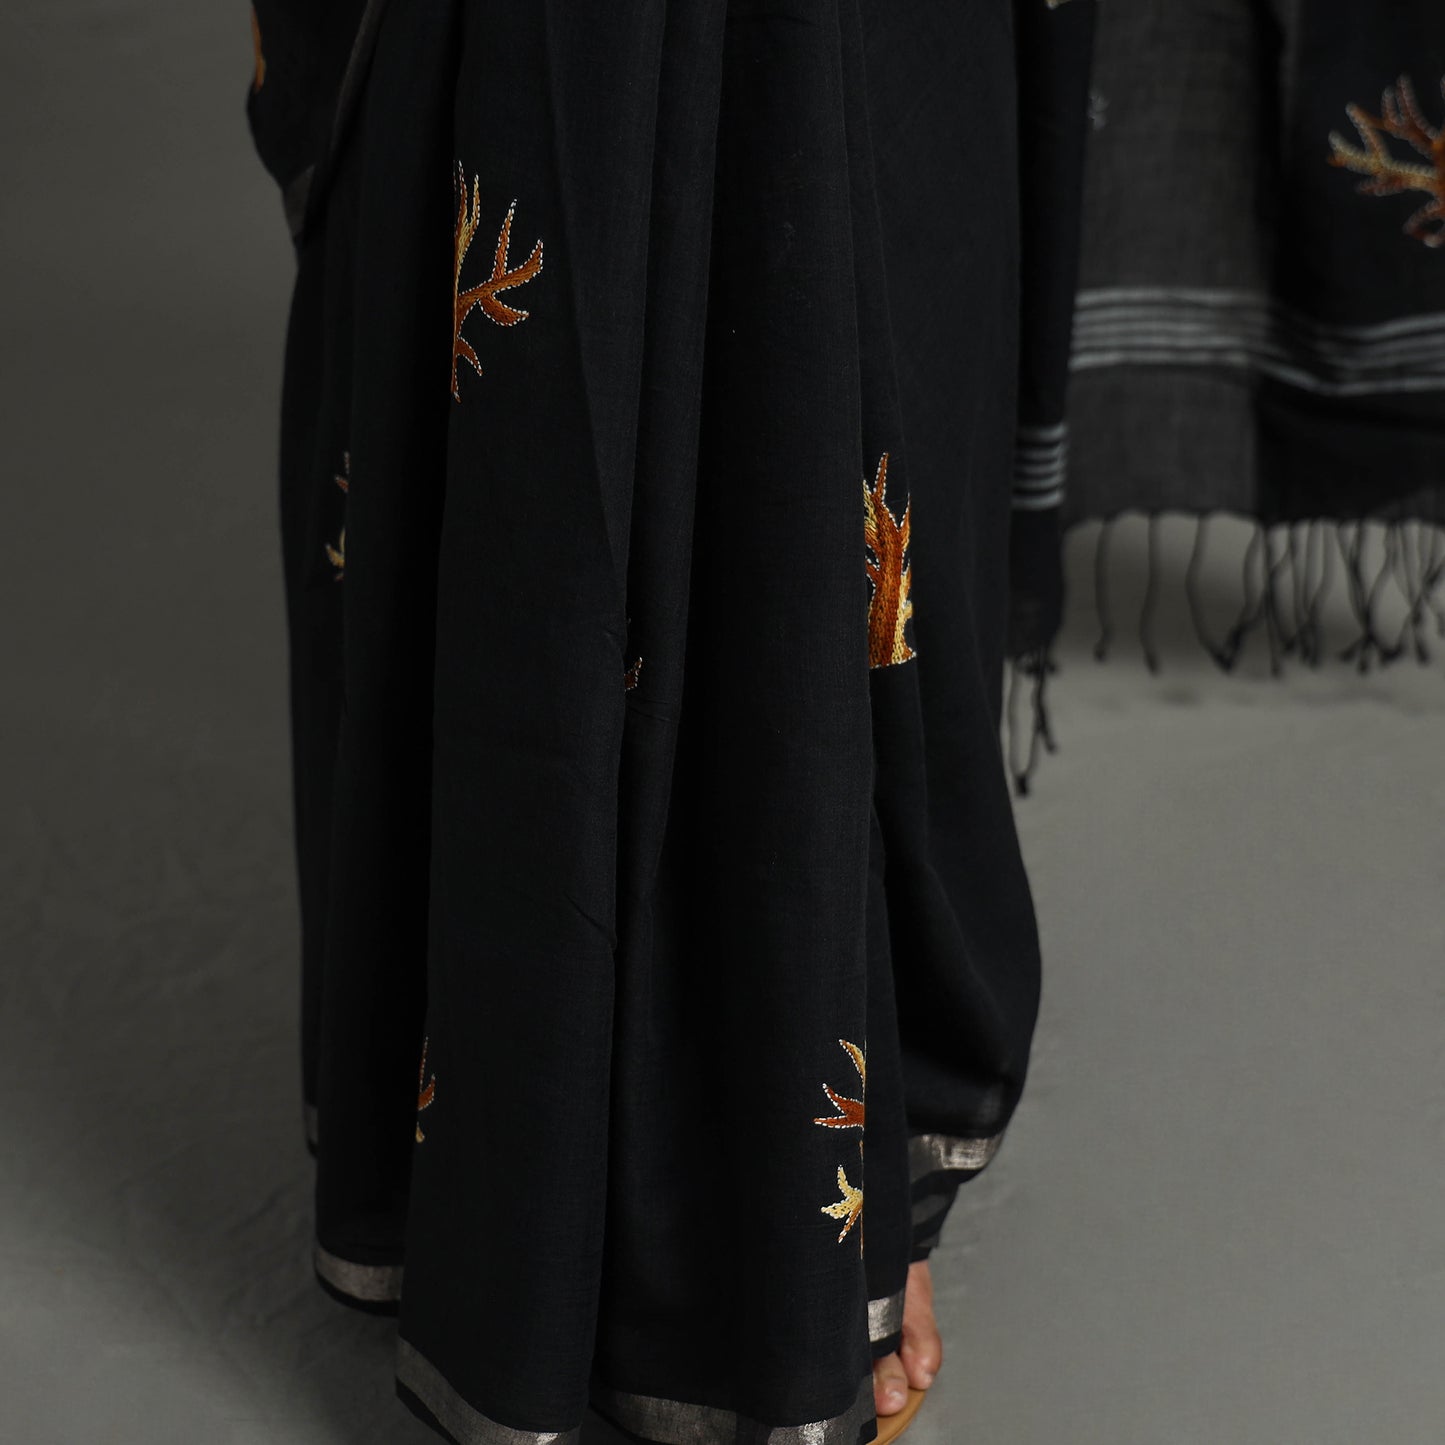 Black - Bengal Kantha Embroidery Handloom Cotton Saree